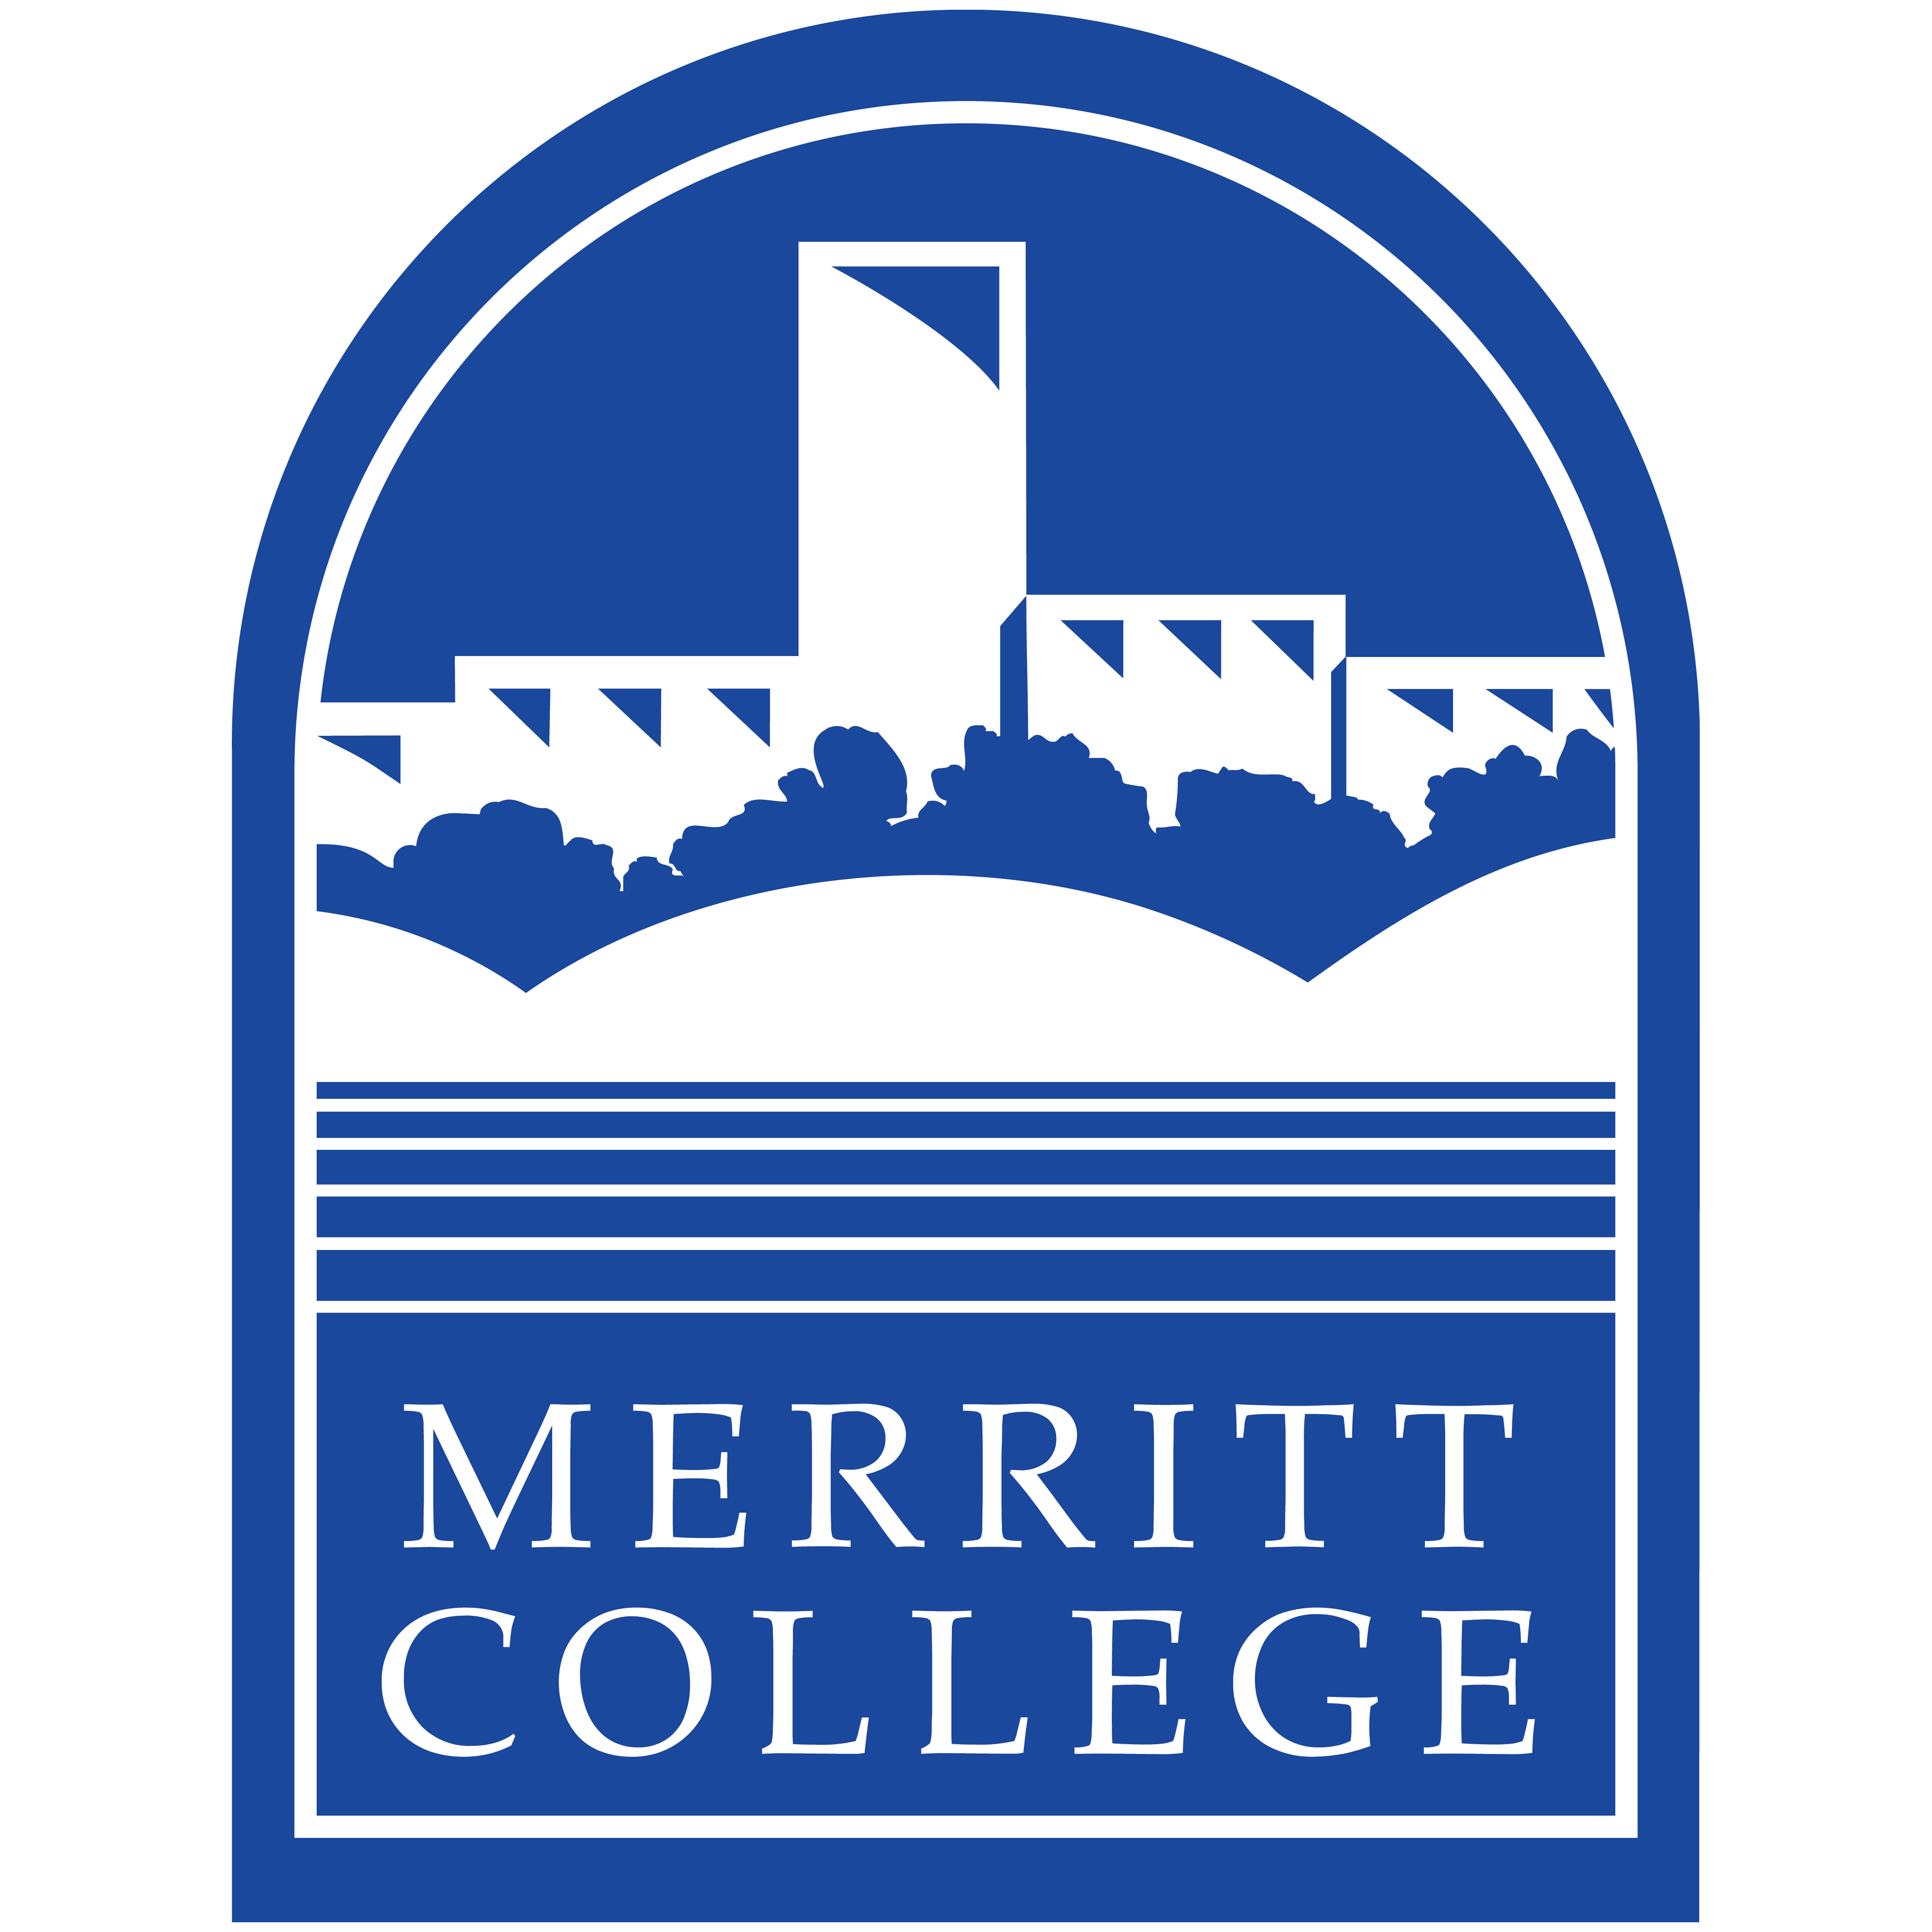 Merritt College logo